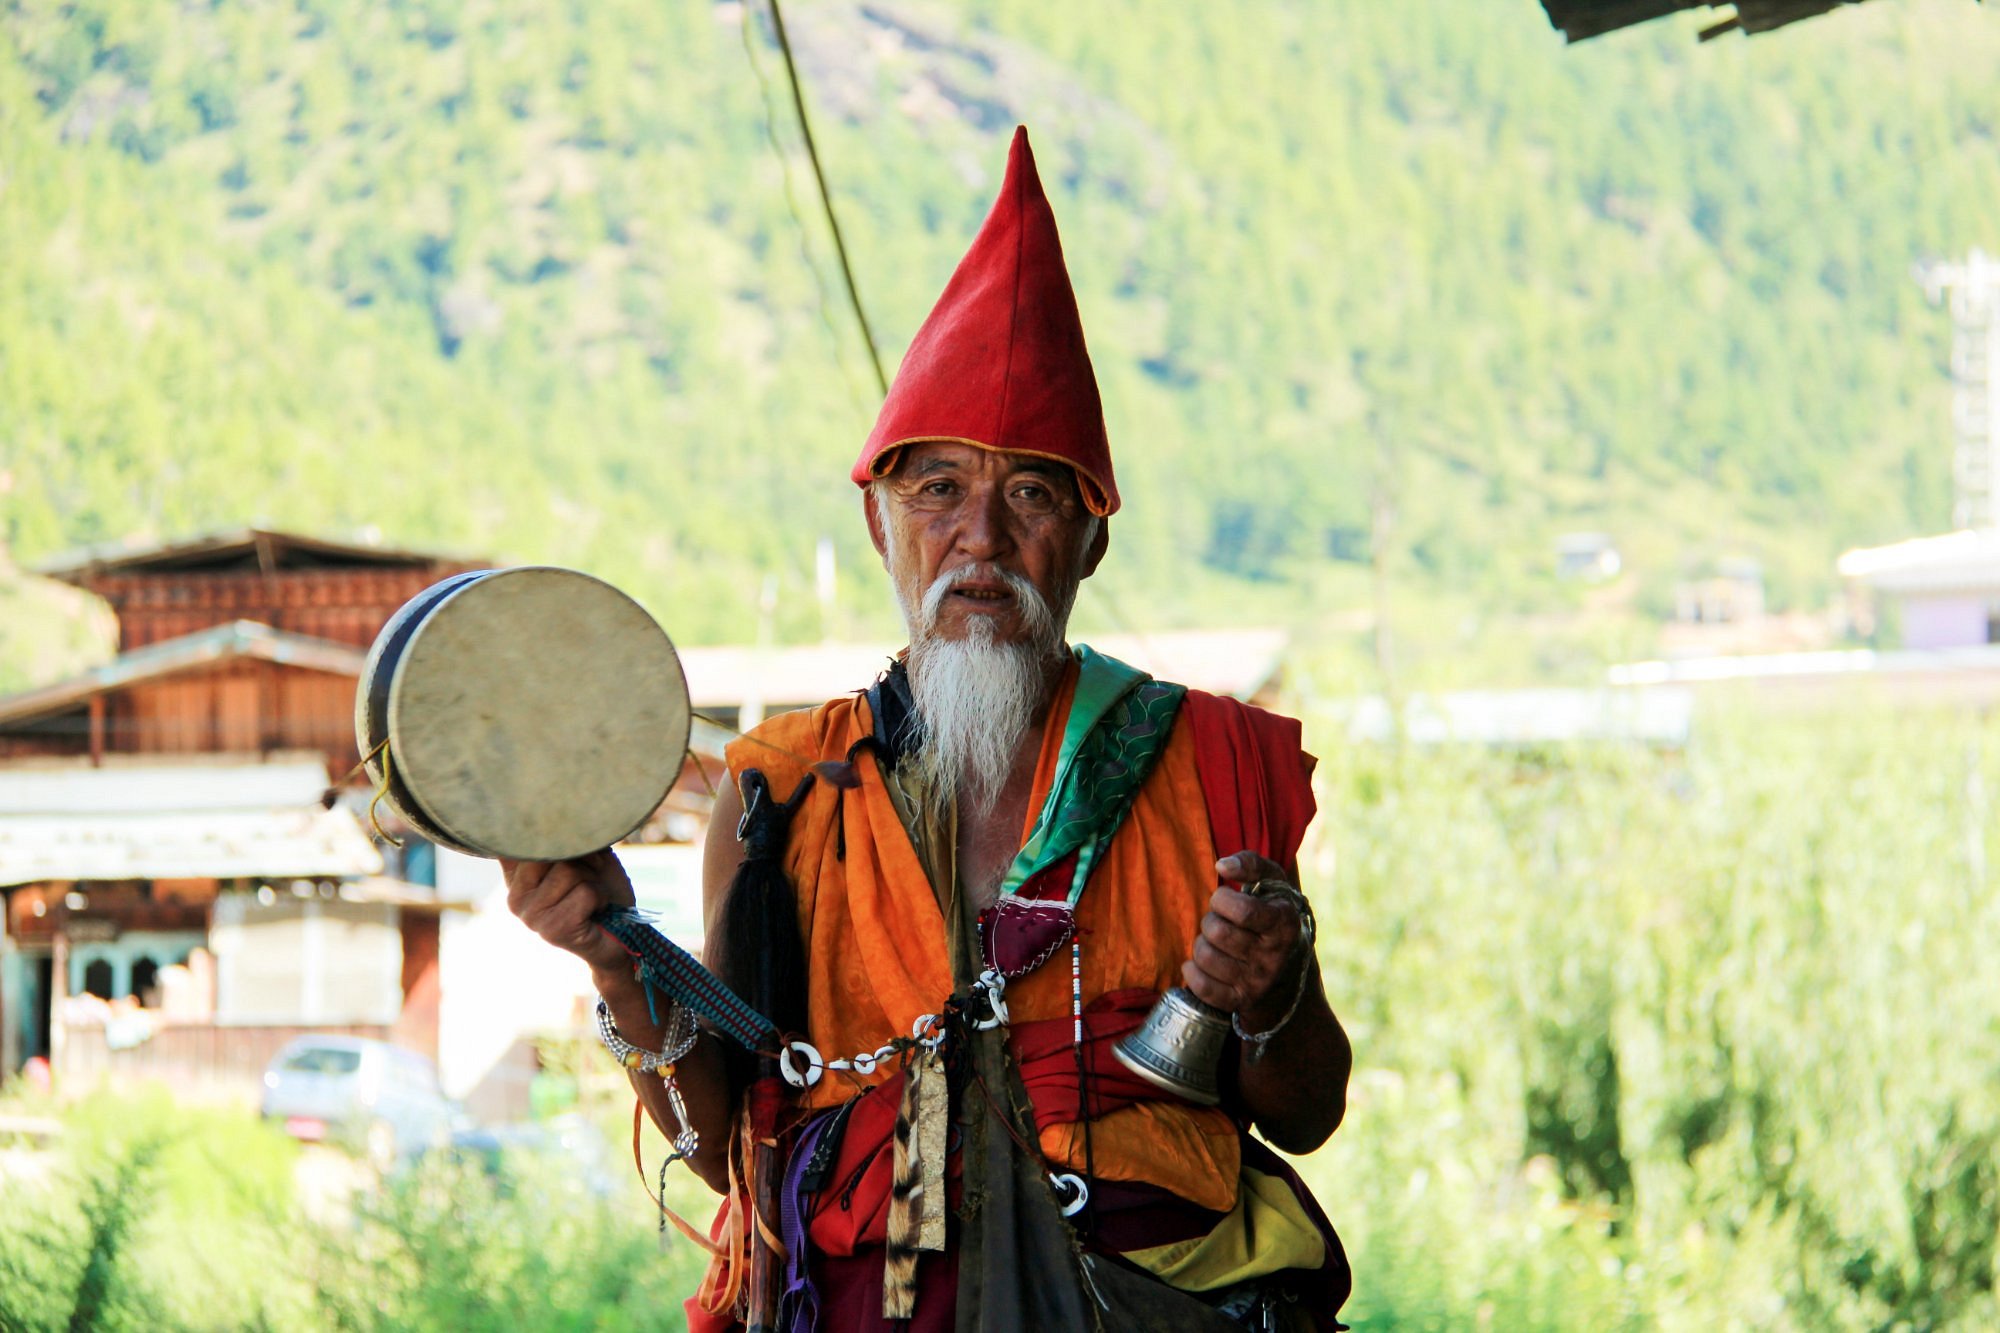 bhutan travel guru reviews